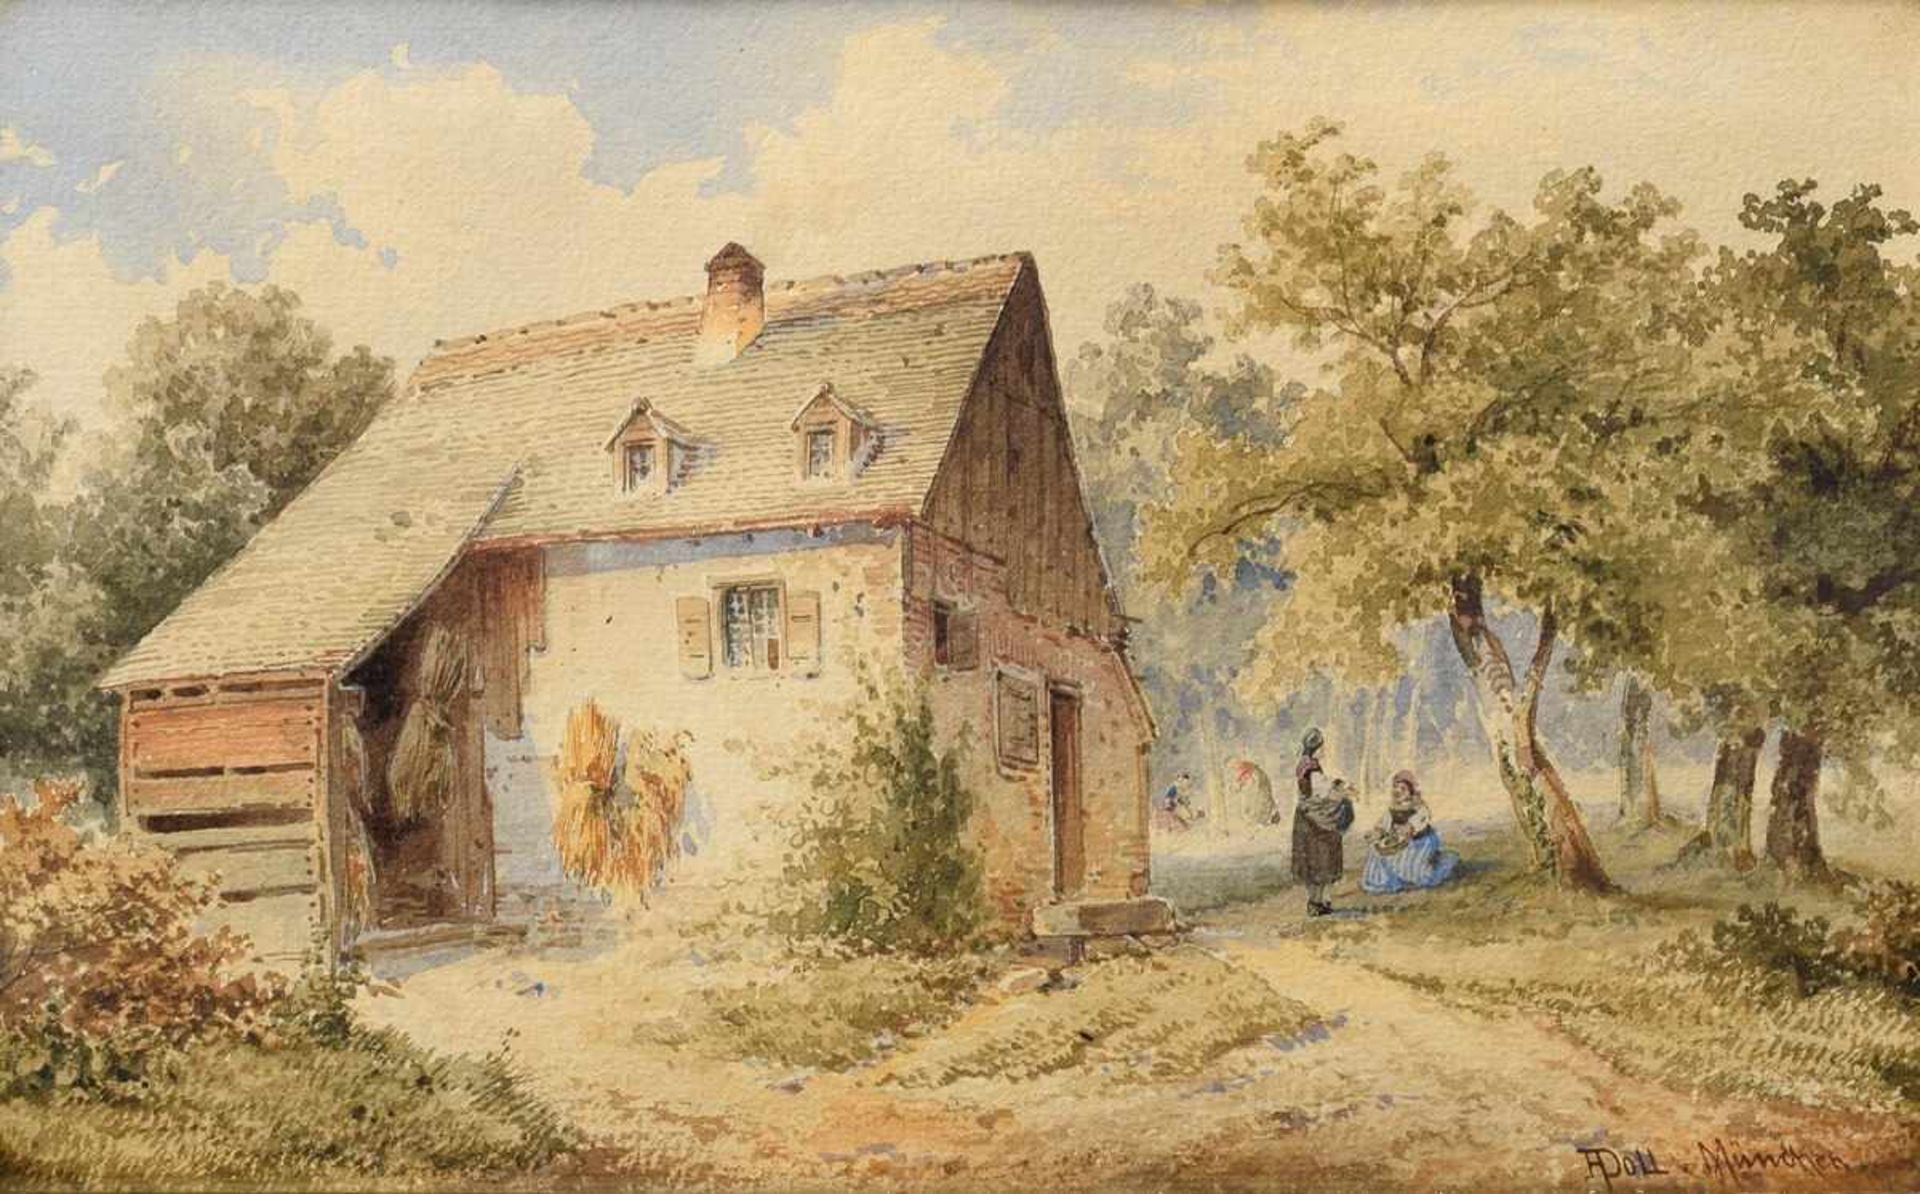 Doll, Anton (1826-1887) "Rural genre", watercolour, signed on the right, 16,5x30cm (w.f. 33x42cm)